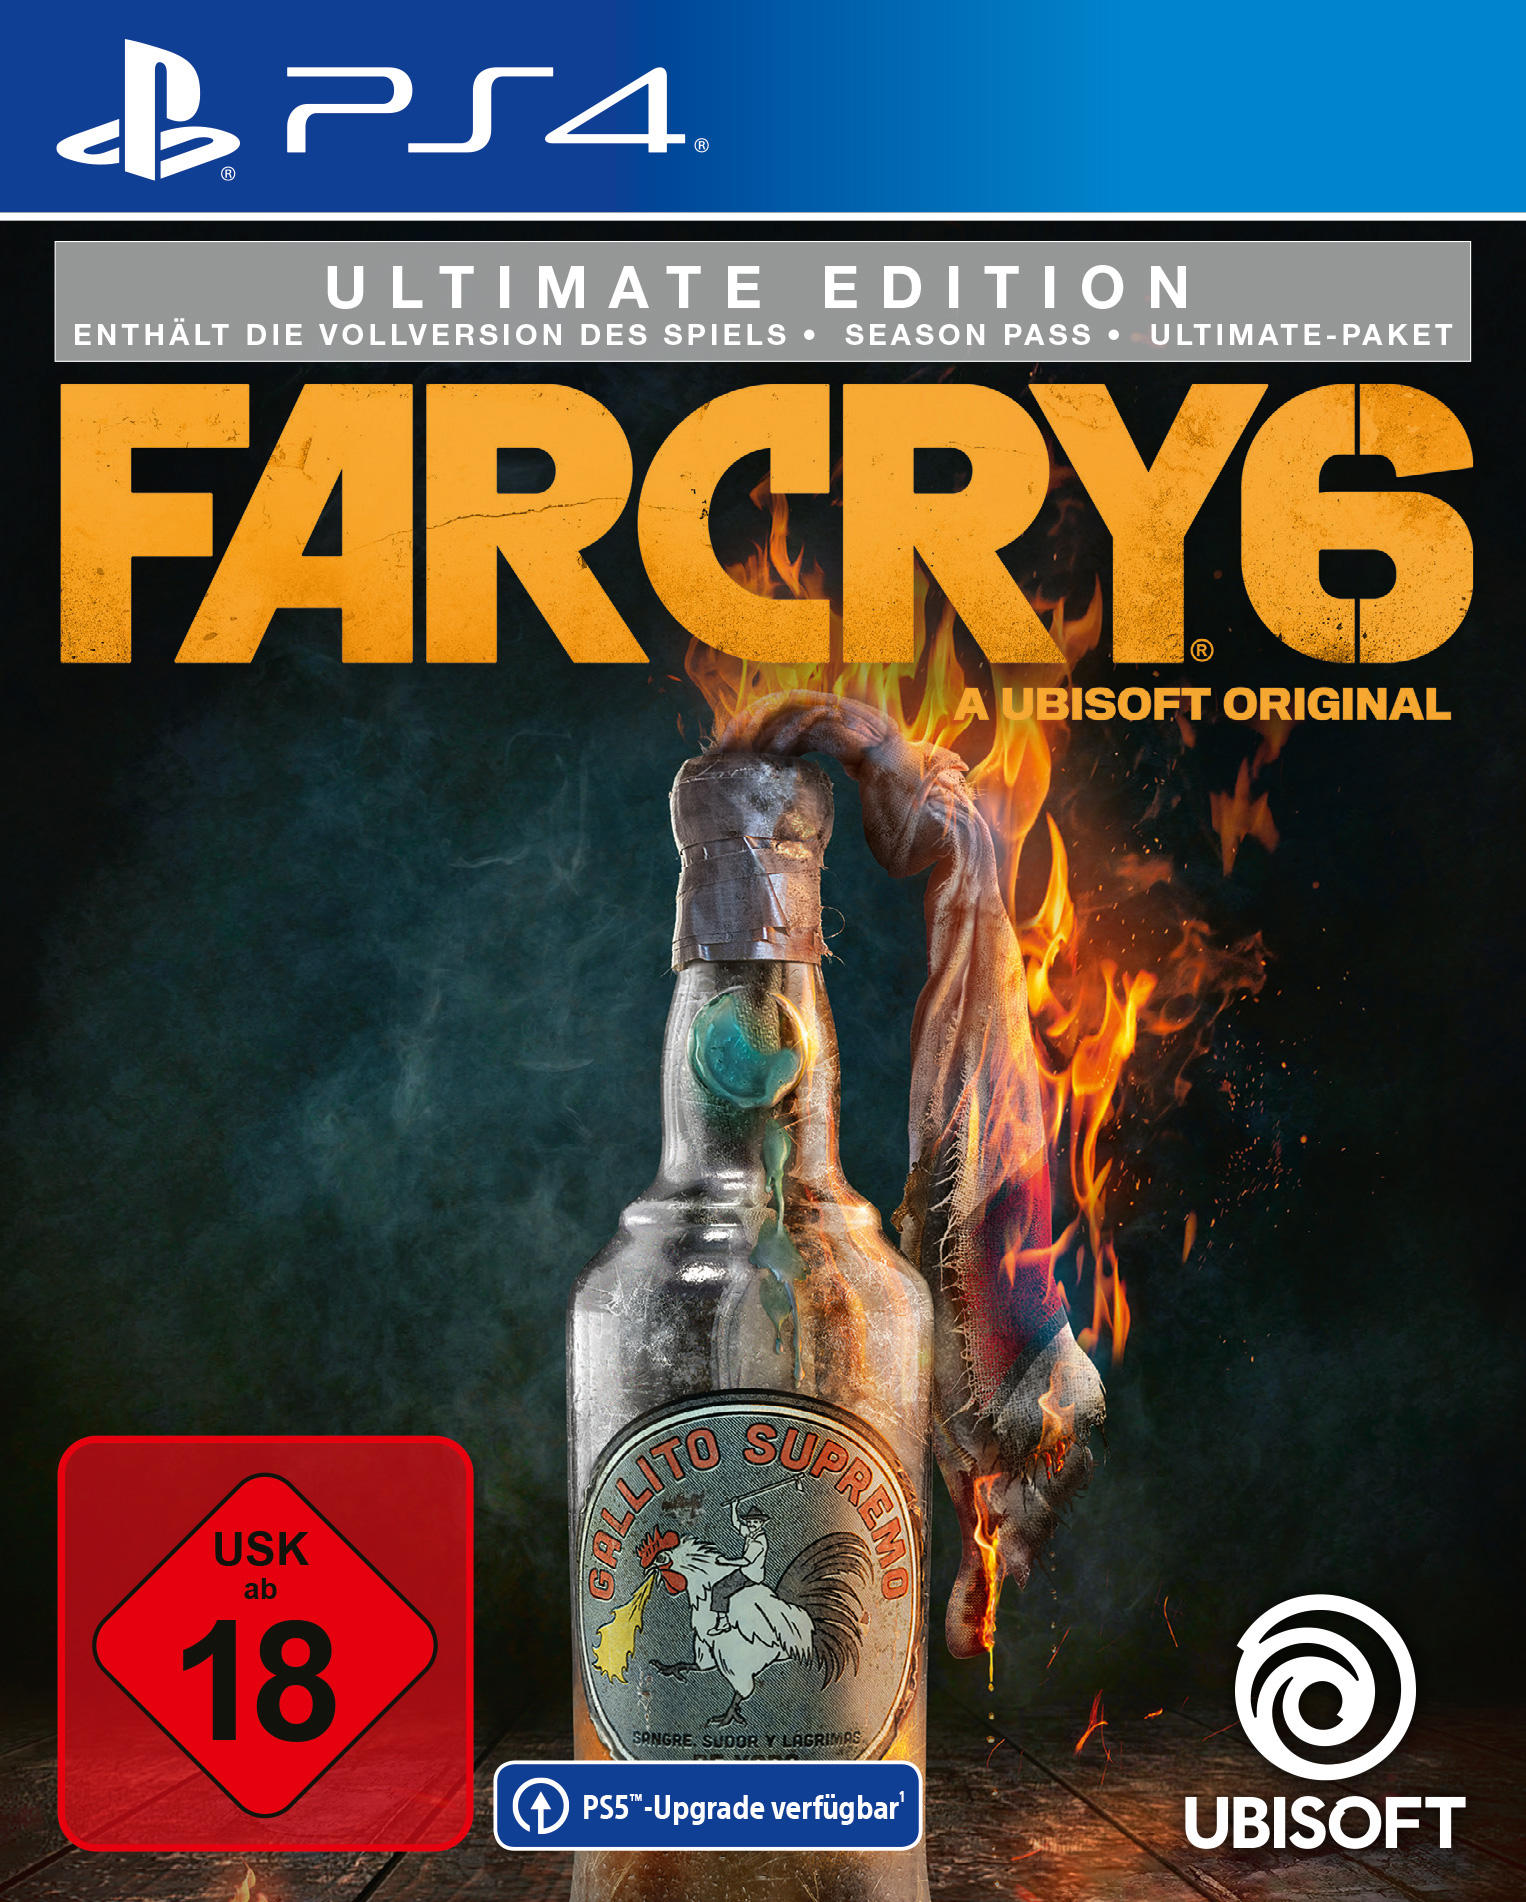 Far Cry 4] 6 Ultimate Edition - [PlayStation 